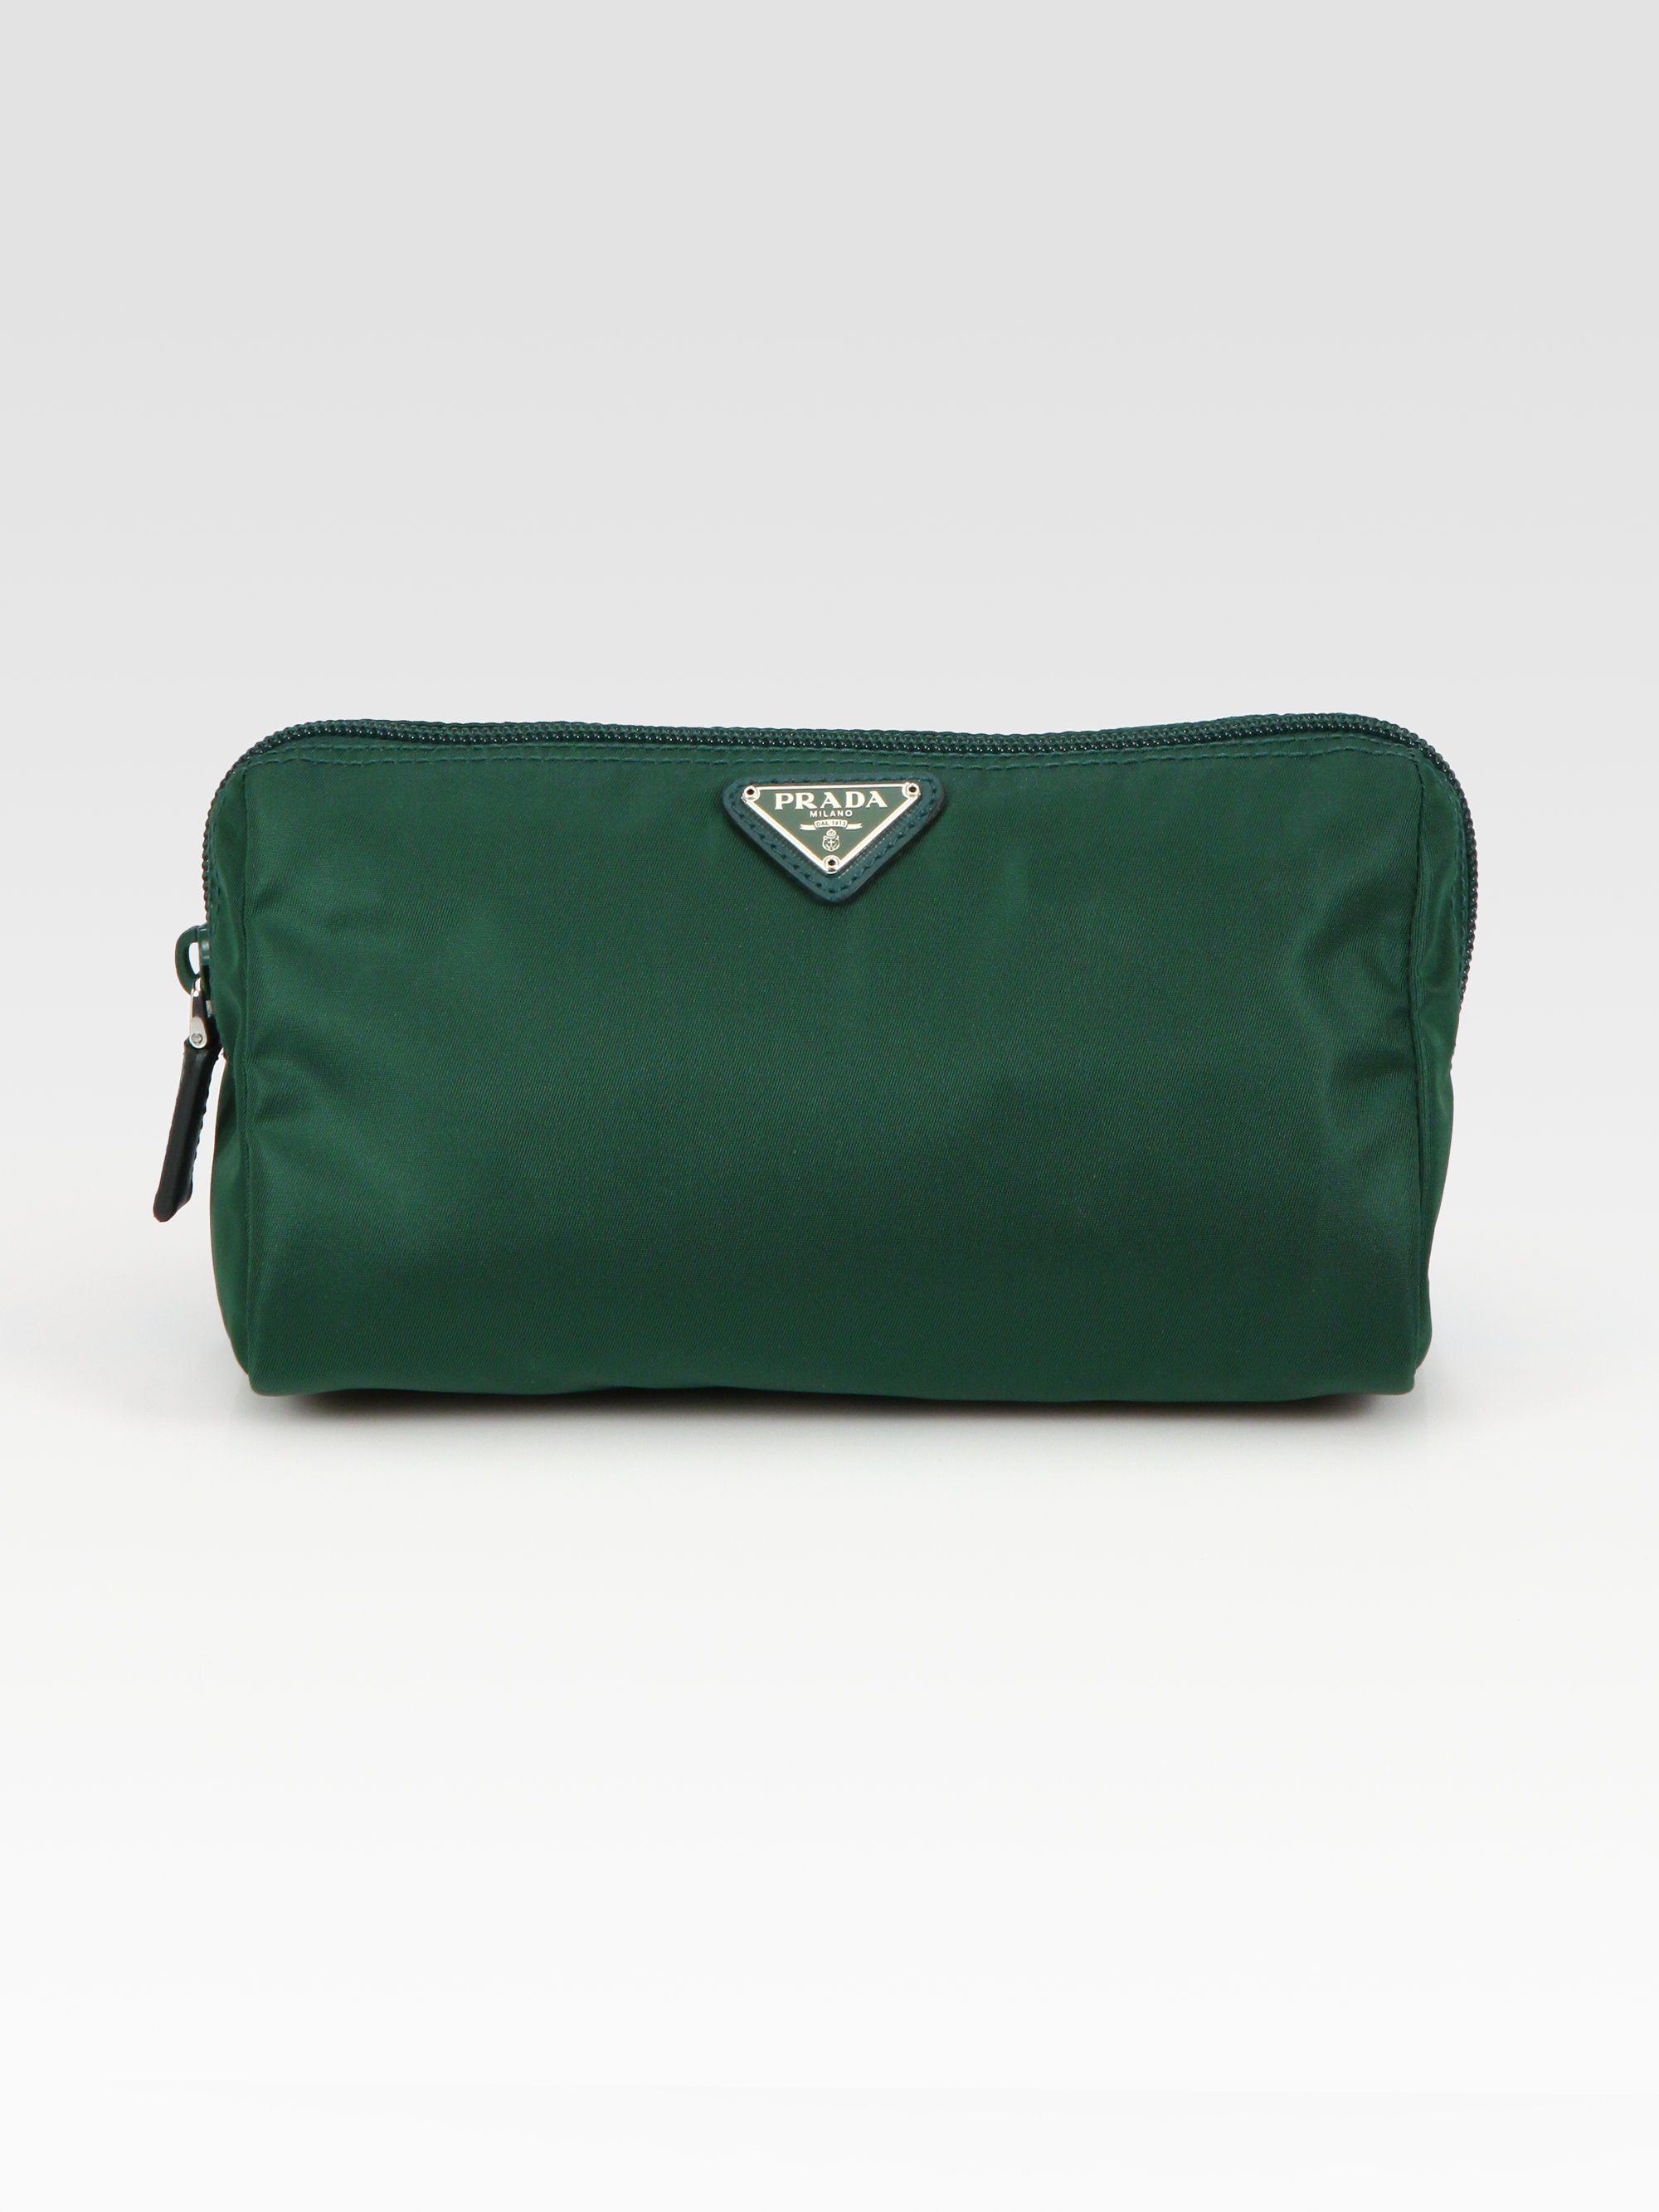 Lyst - Prada Nylon Triangle Cosmetic Bag in Green